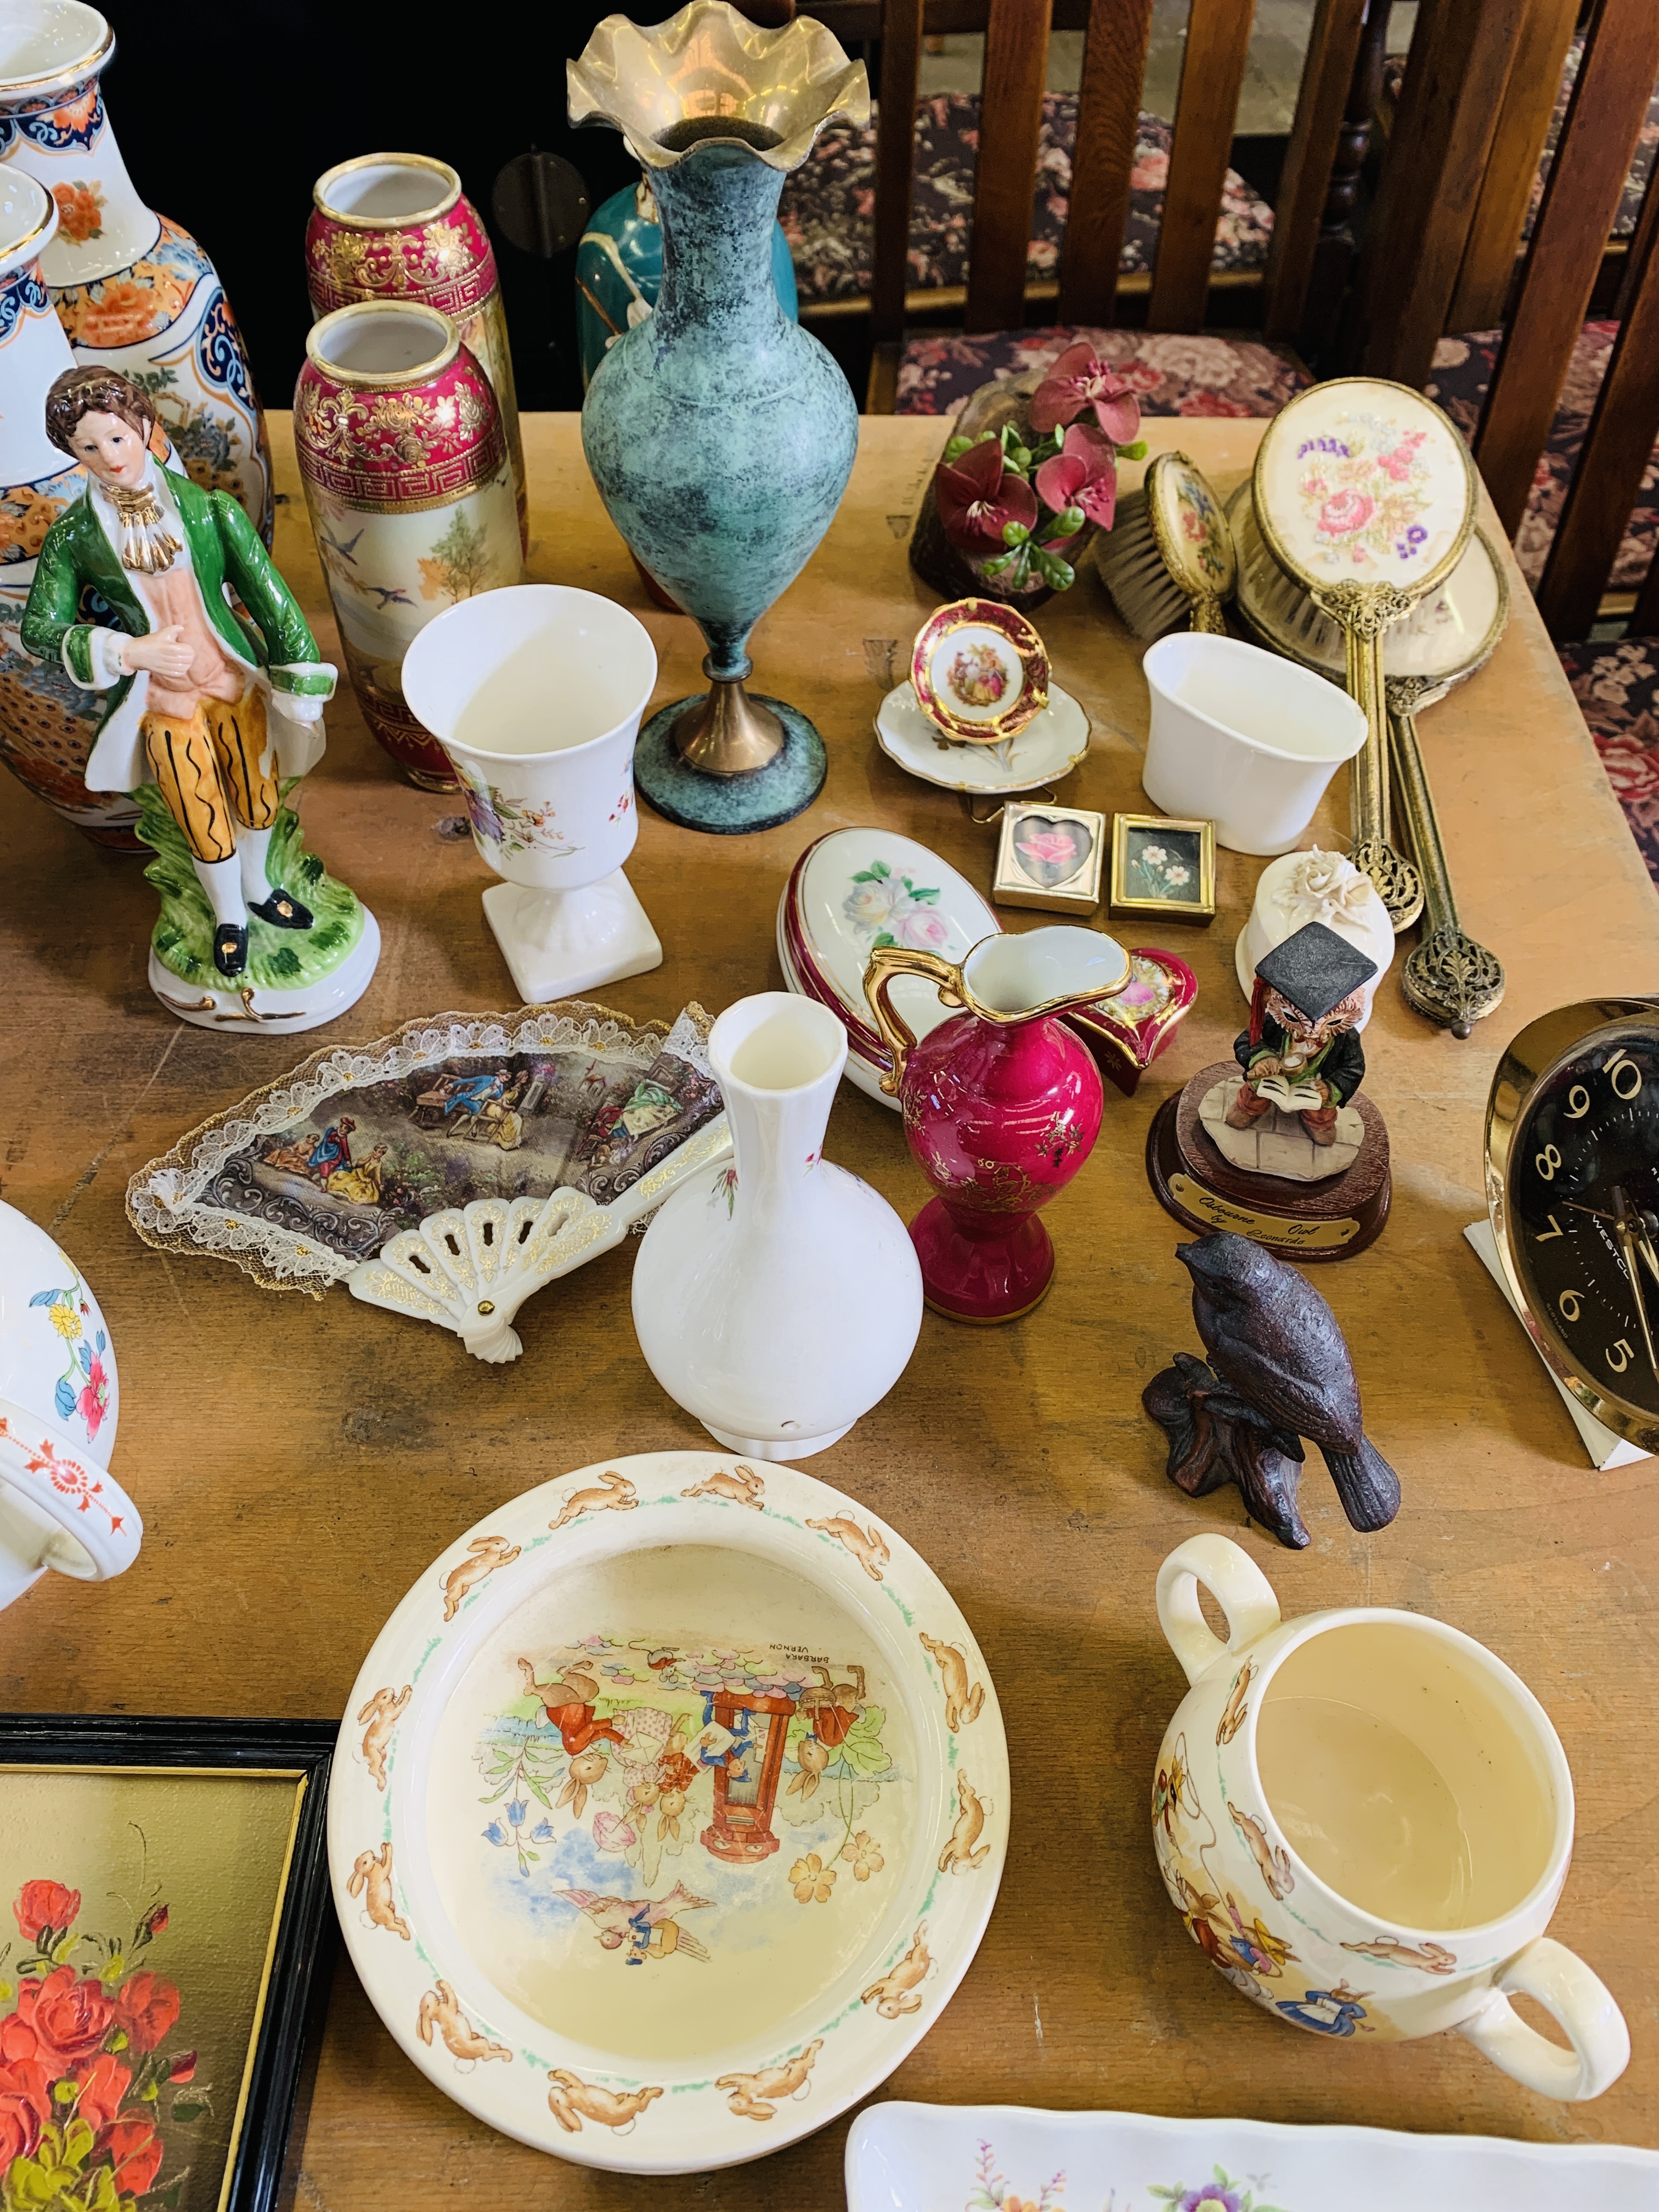 Quantity of decorative china including Bunnykins.